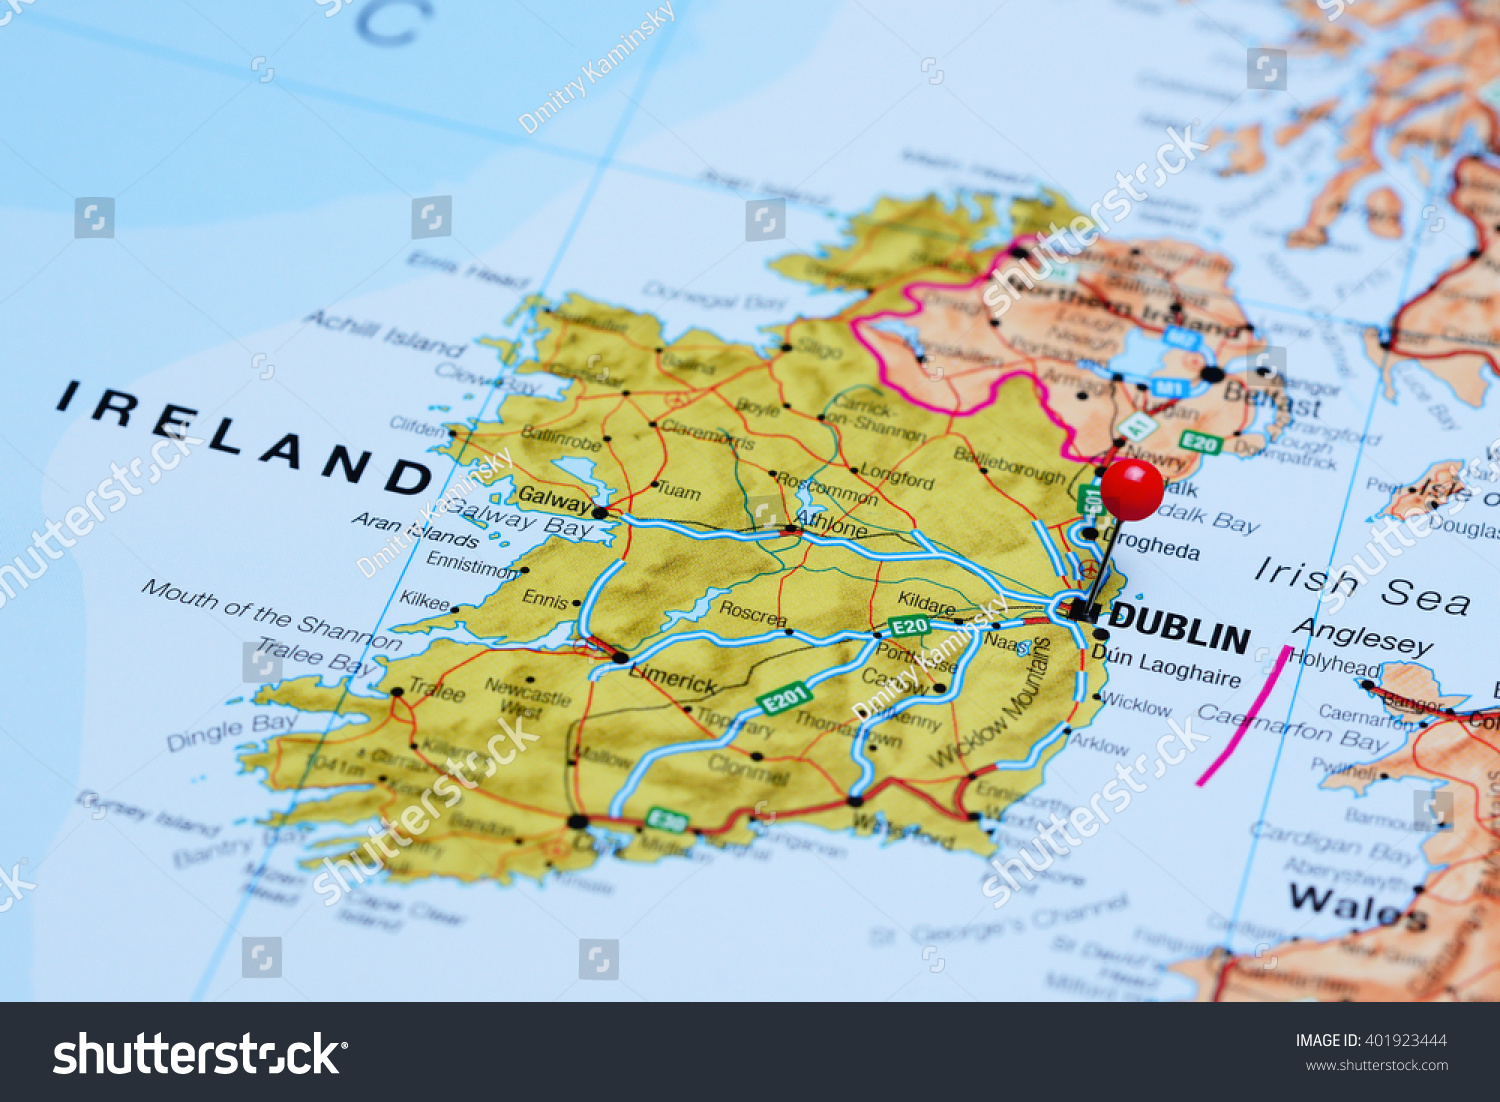 Stock Photo Dublin Pinned On A Map Of Ireland 401923444 